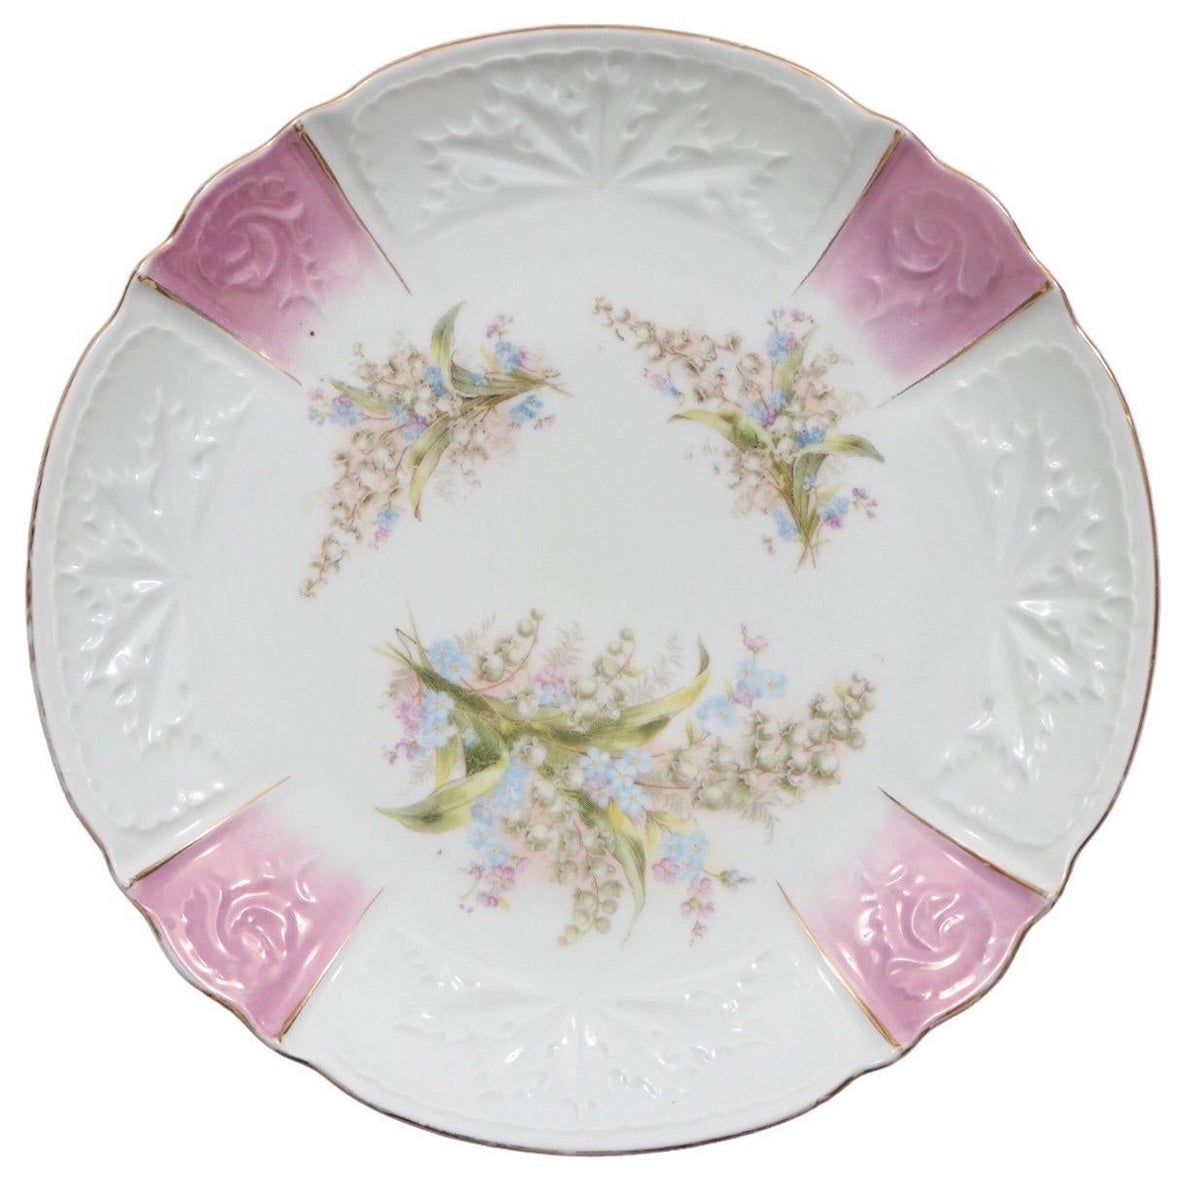 Bavarian Style Ceramic Serving Plate